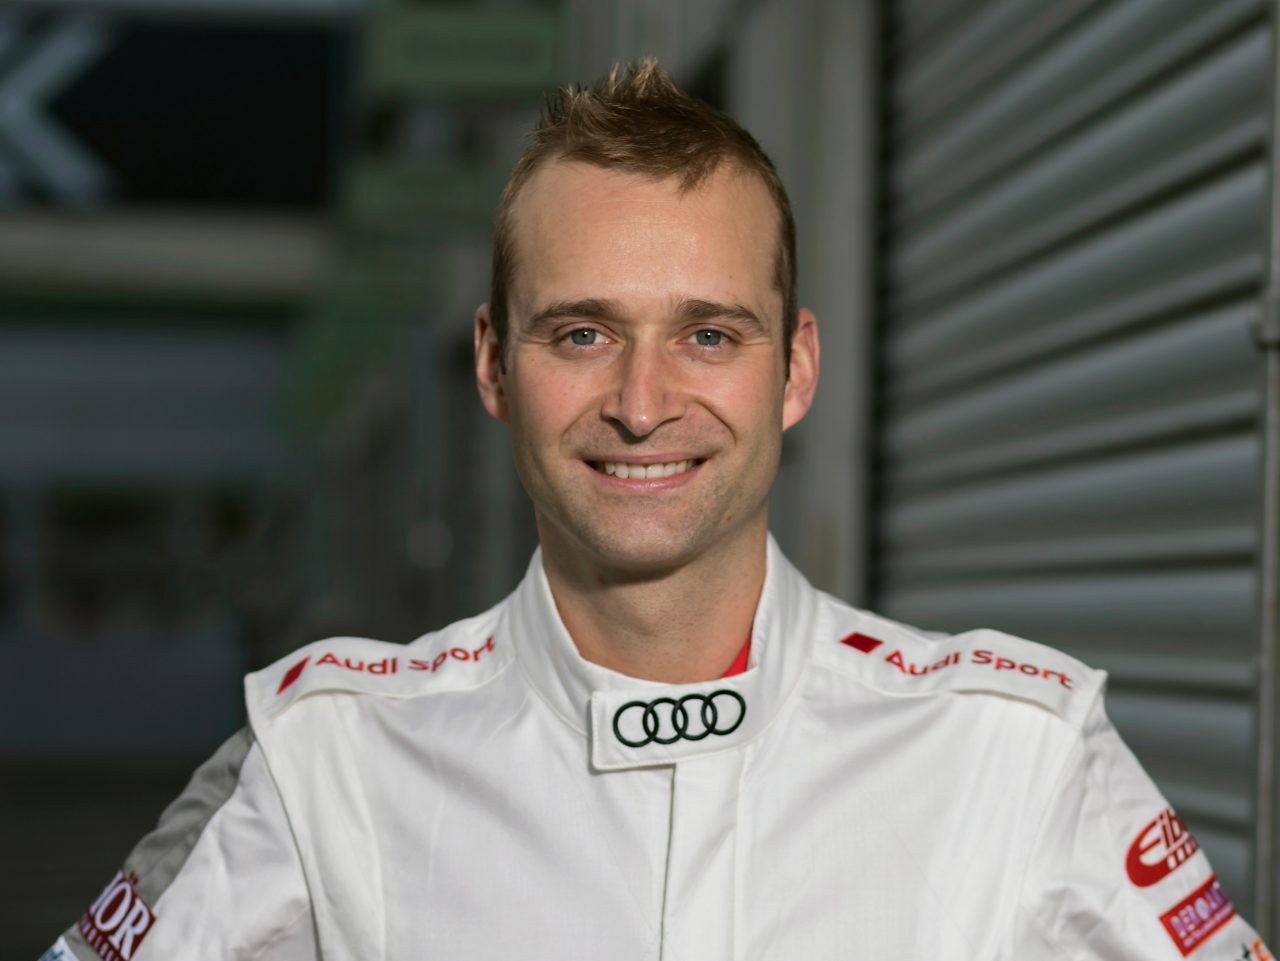 Il pilota dell'Audi Sport Christopher Haase